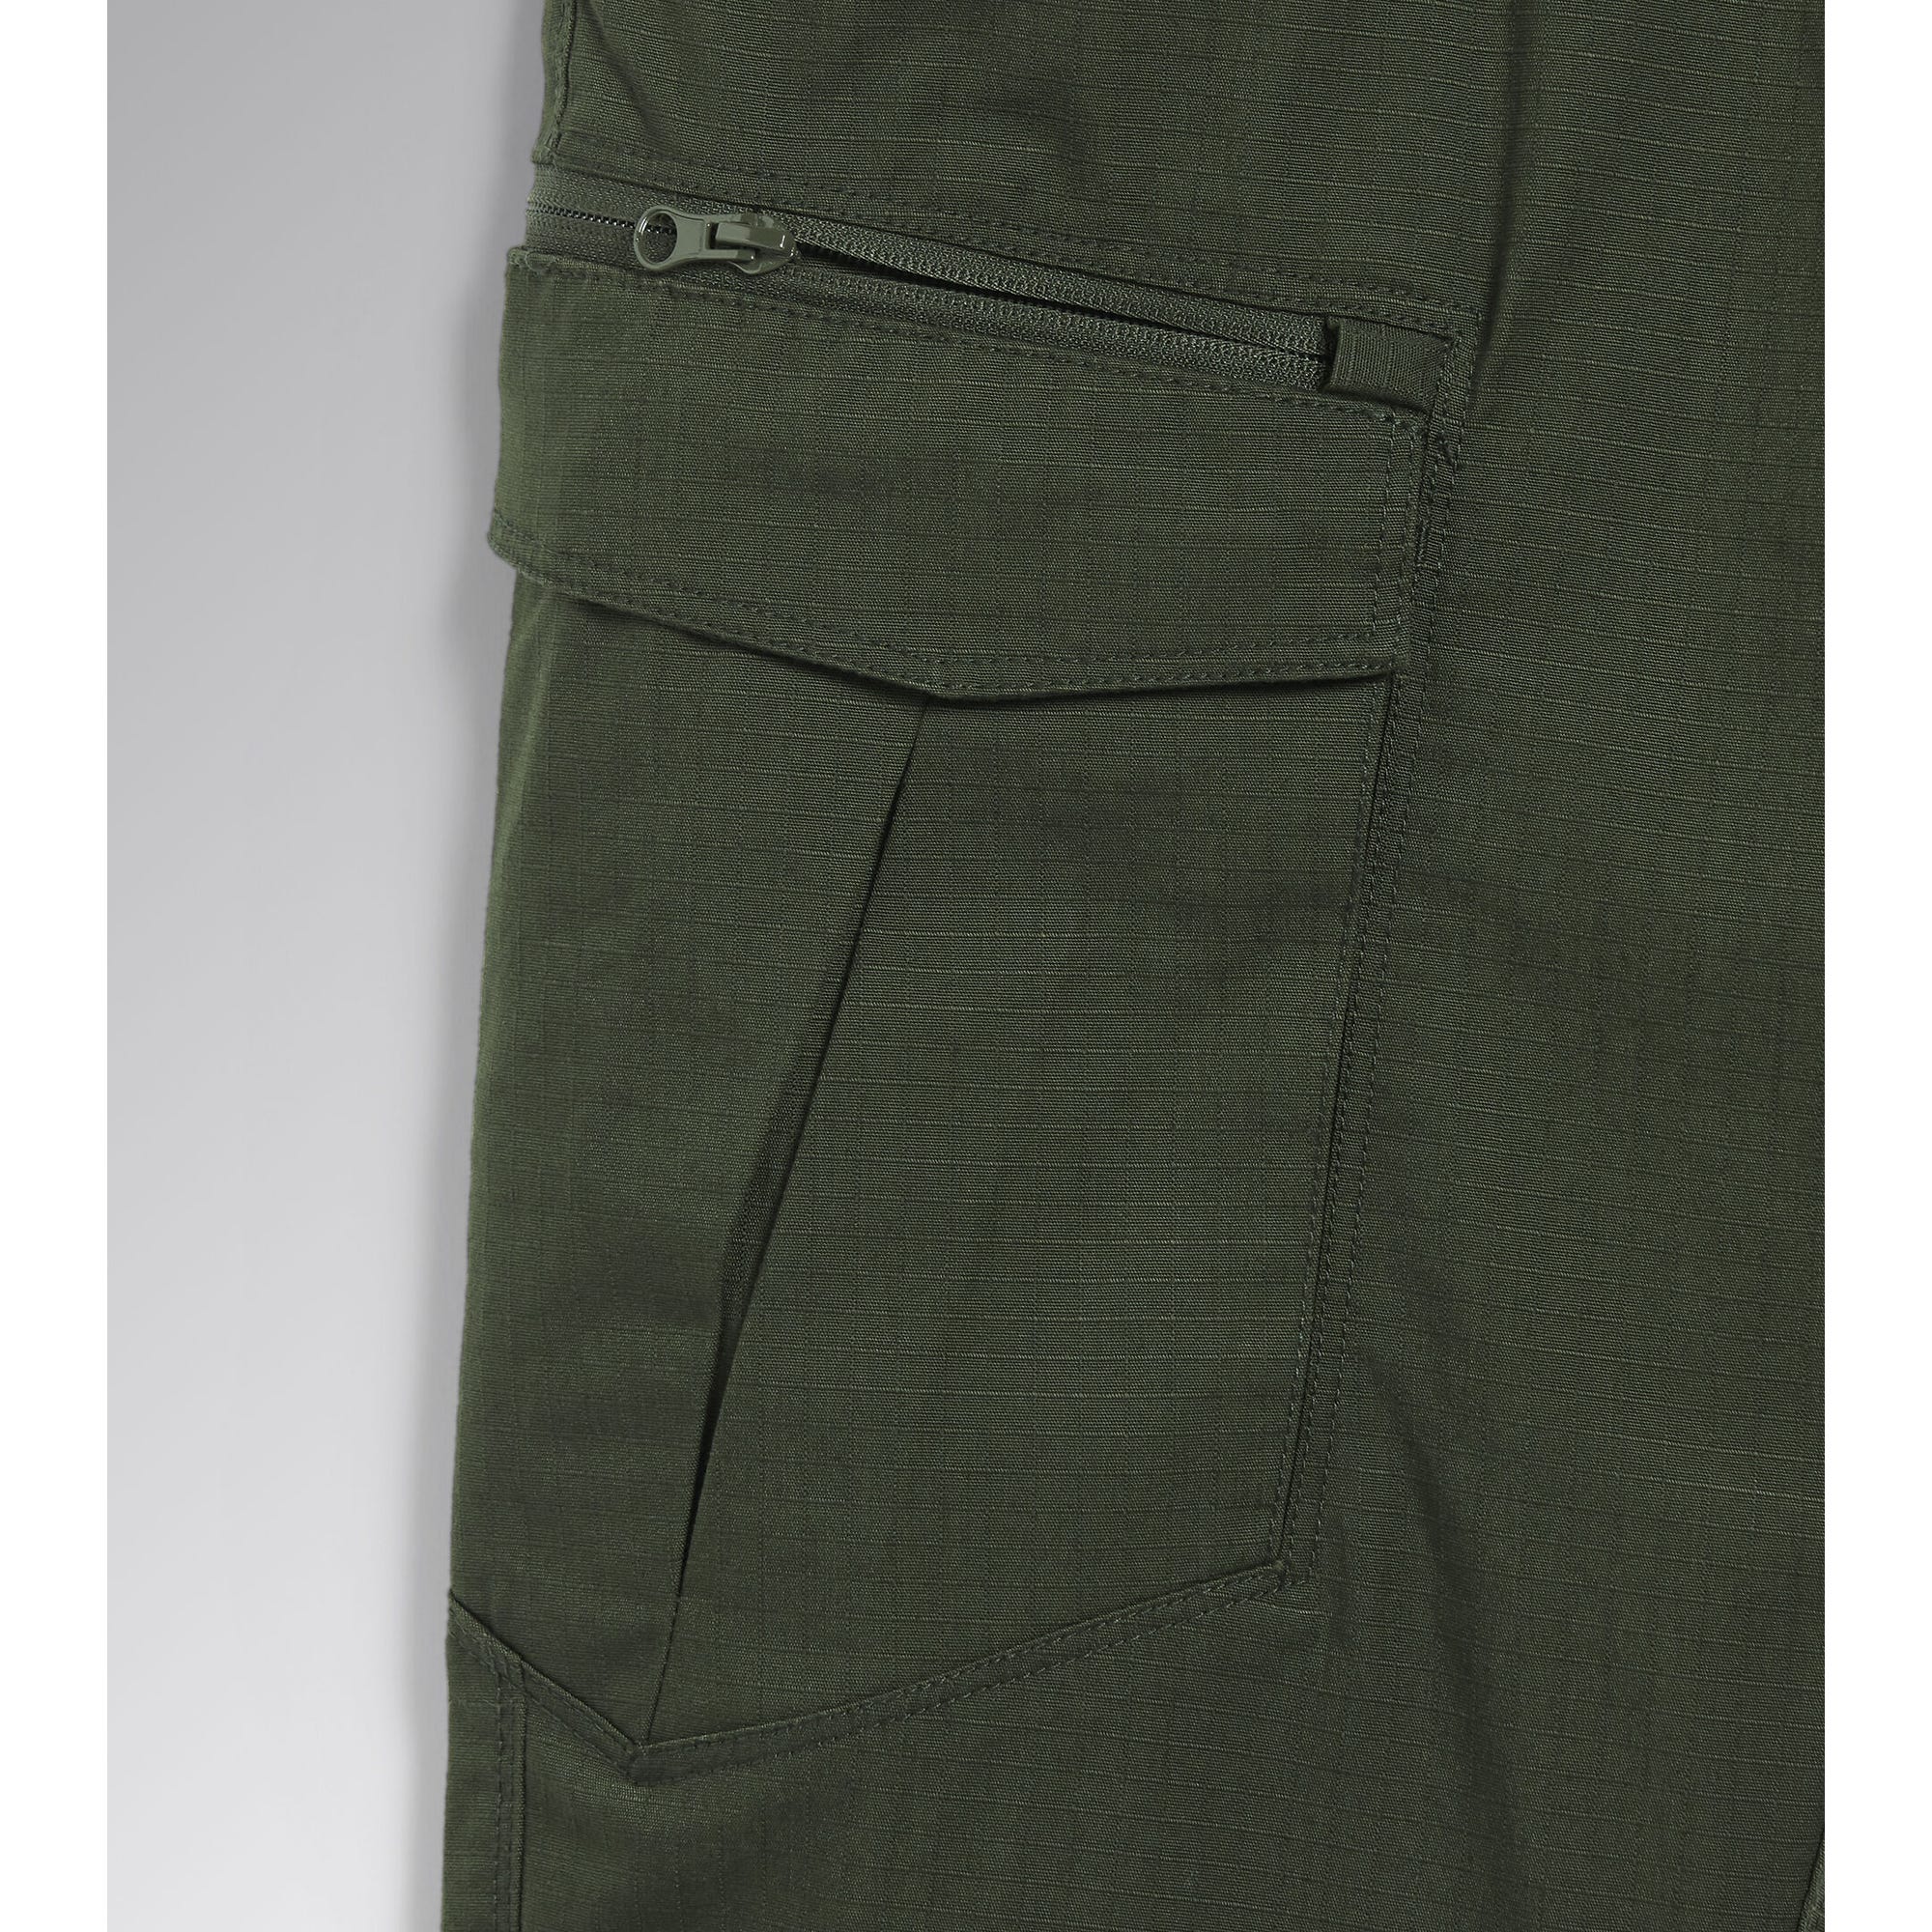 Pantalon de travail DIADORA CROSS CARGO Vert / Forêt XL 4